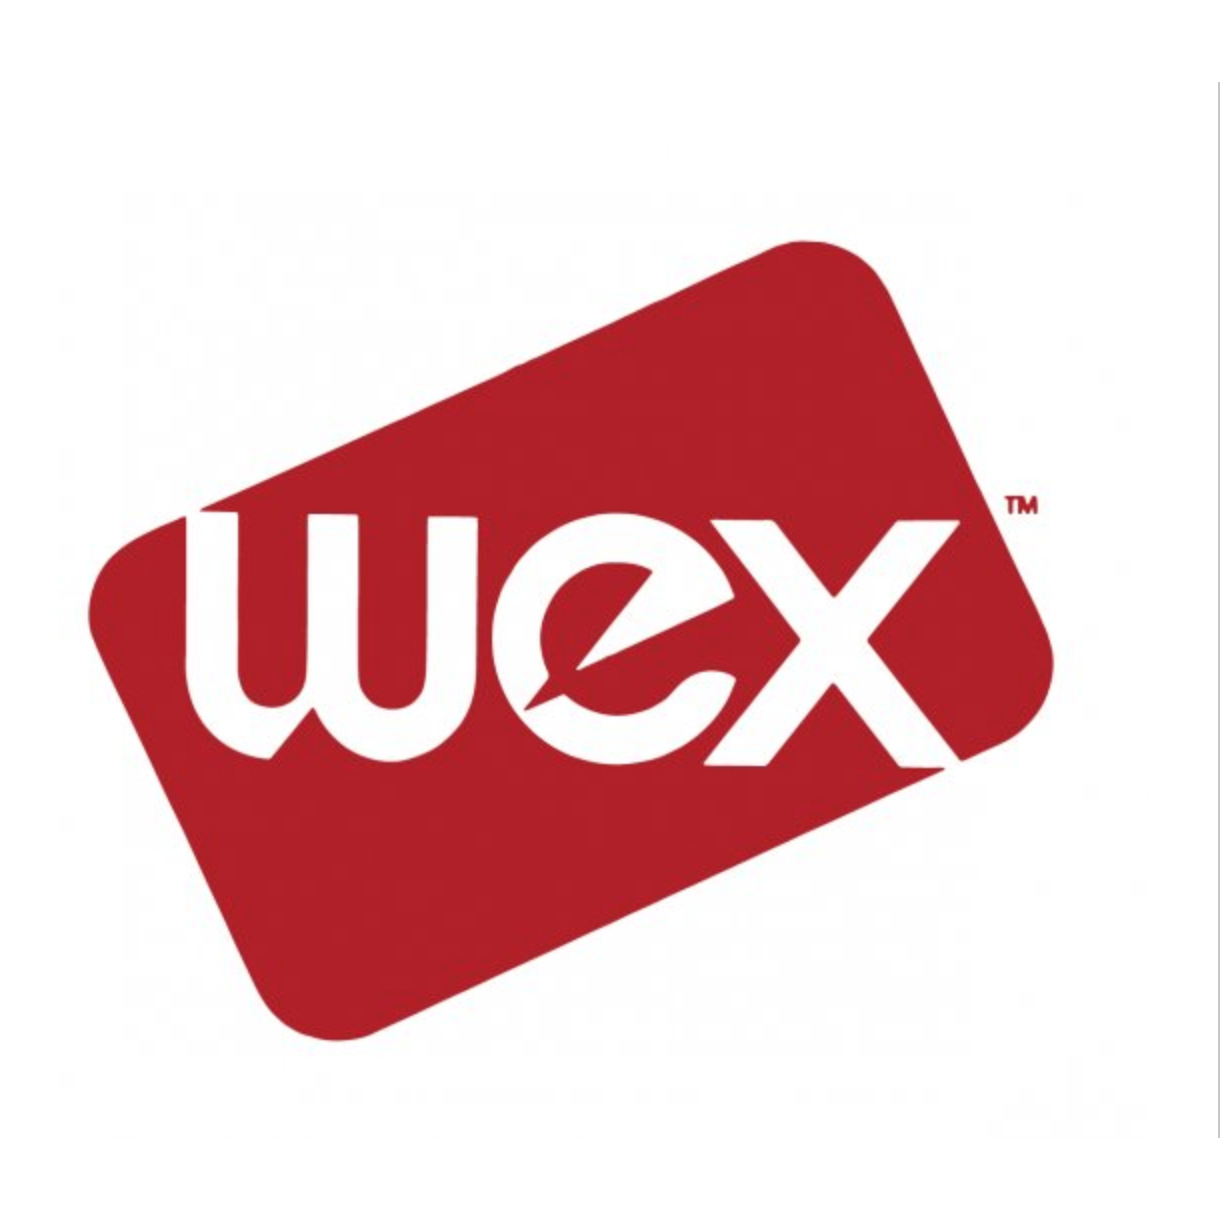 WEX